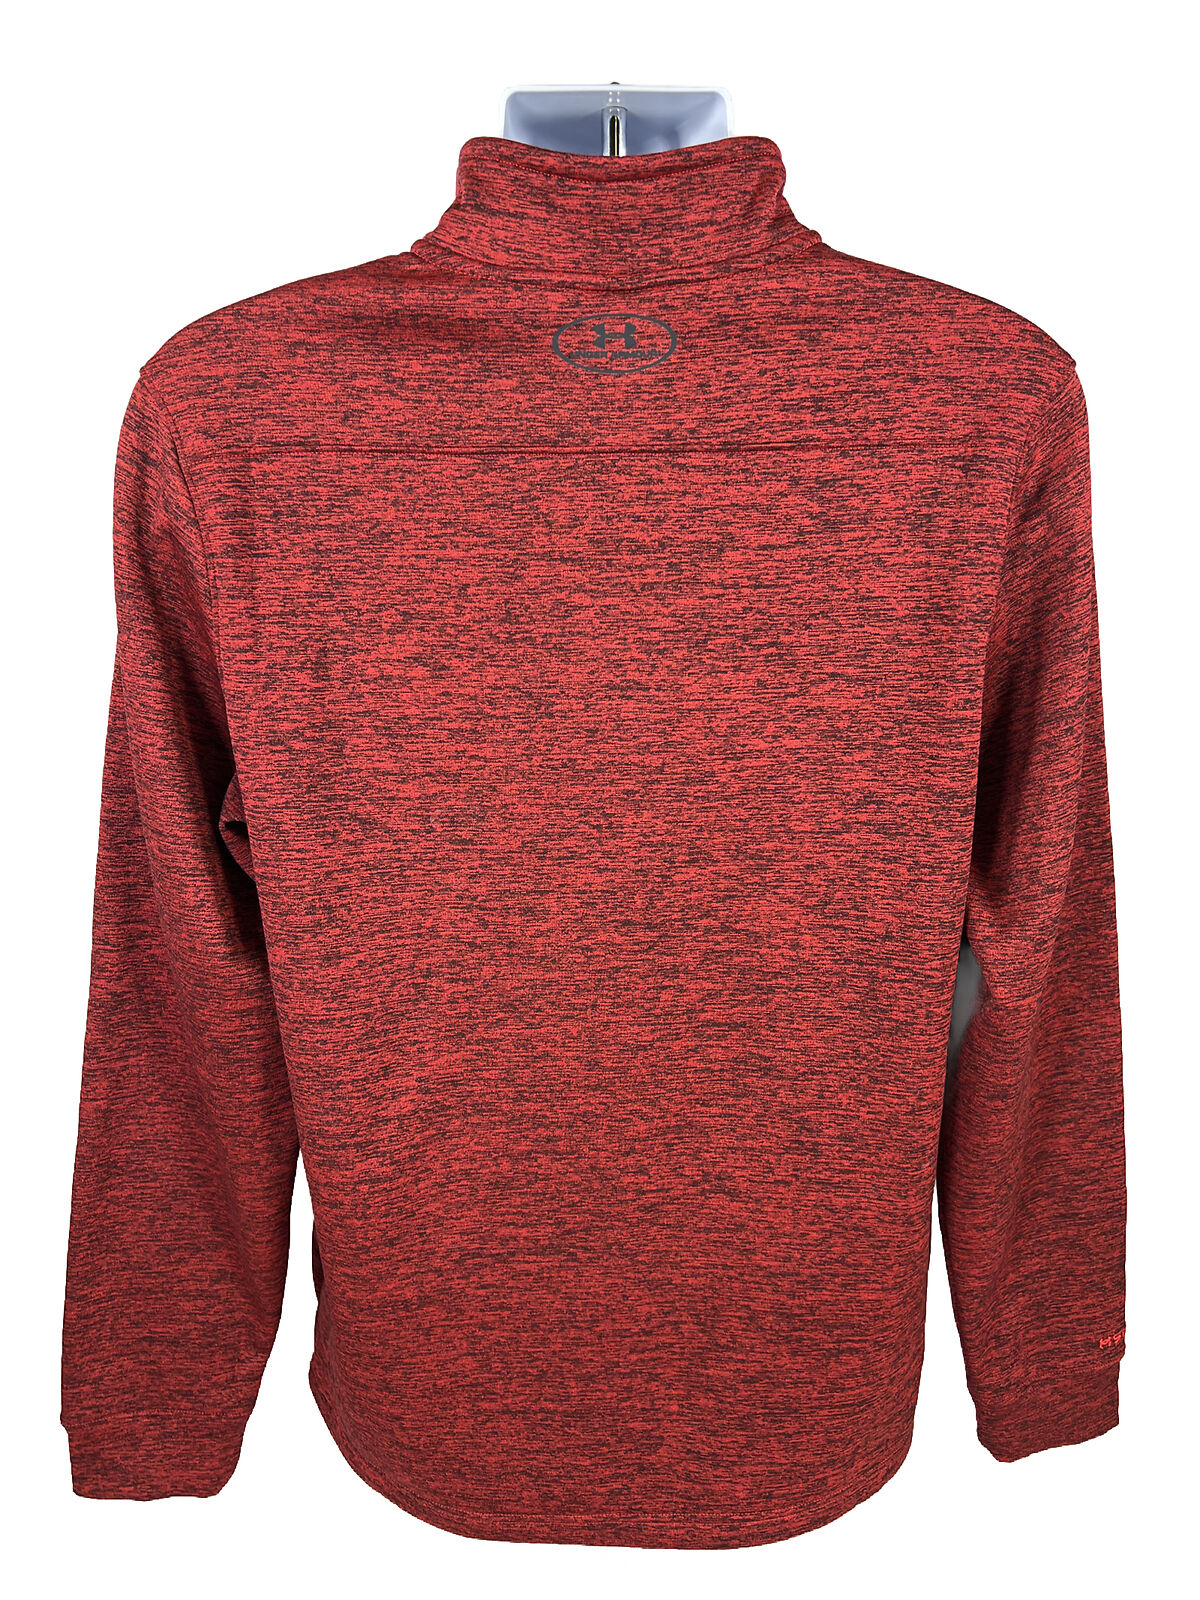 Under Armour Men's Red Rival Loose Fit Fleece Pullover Sweatshirt - M